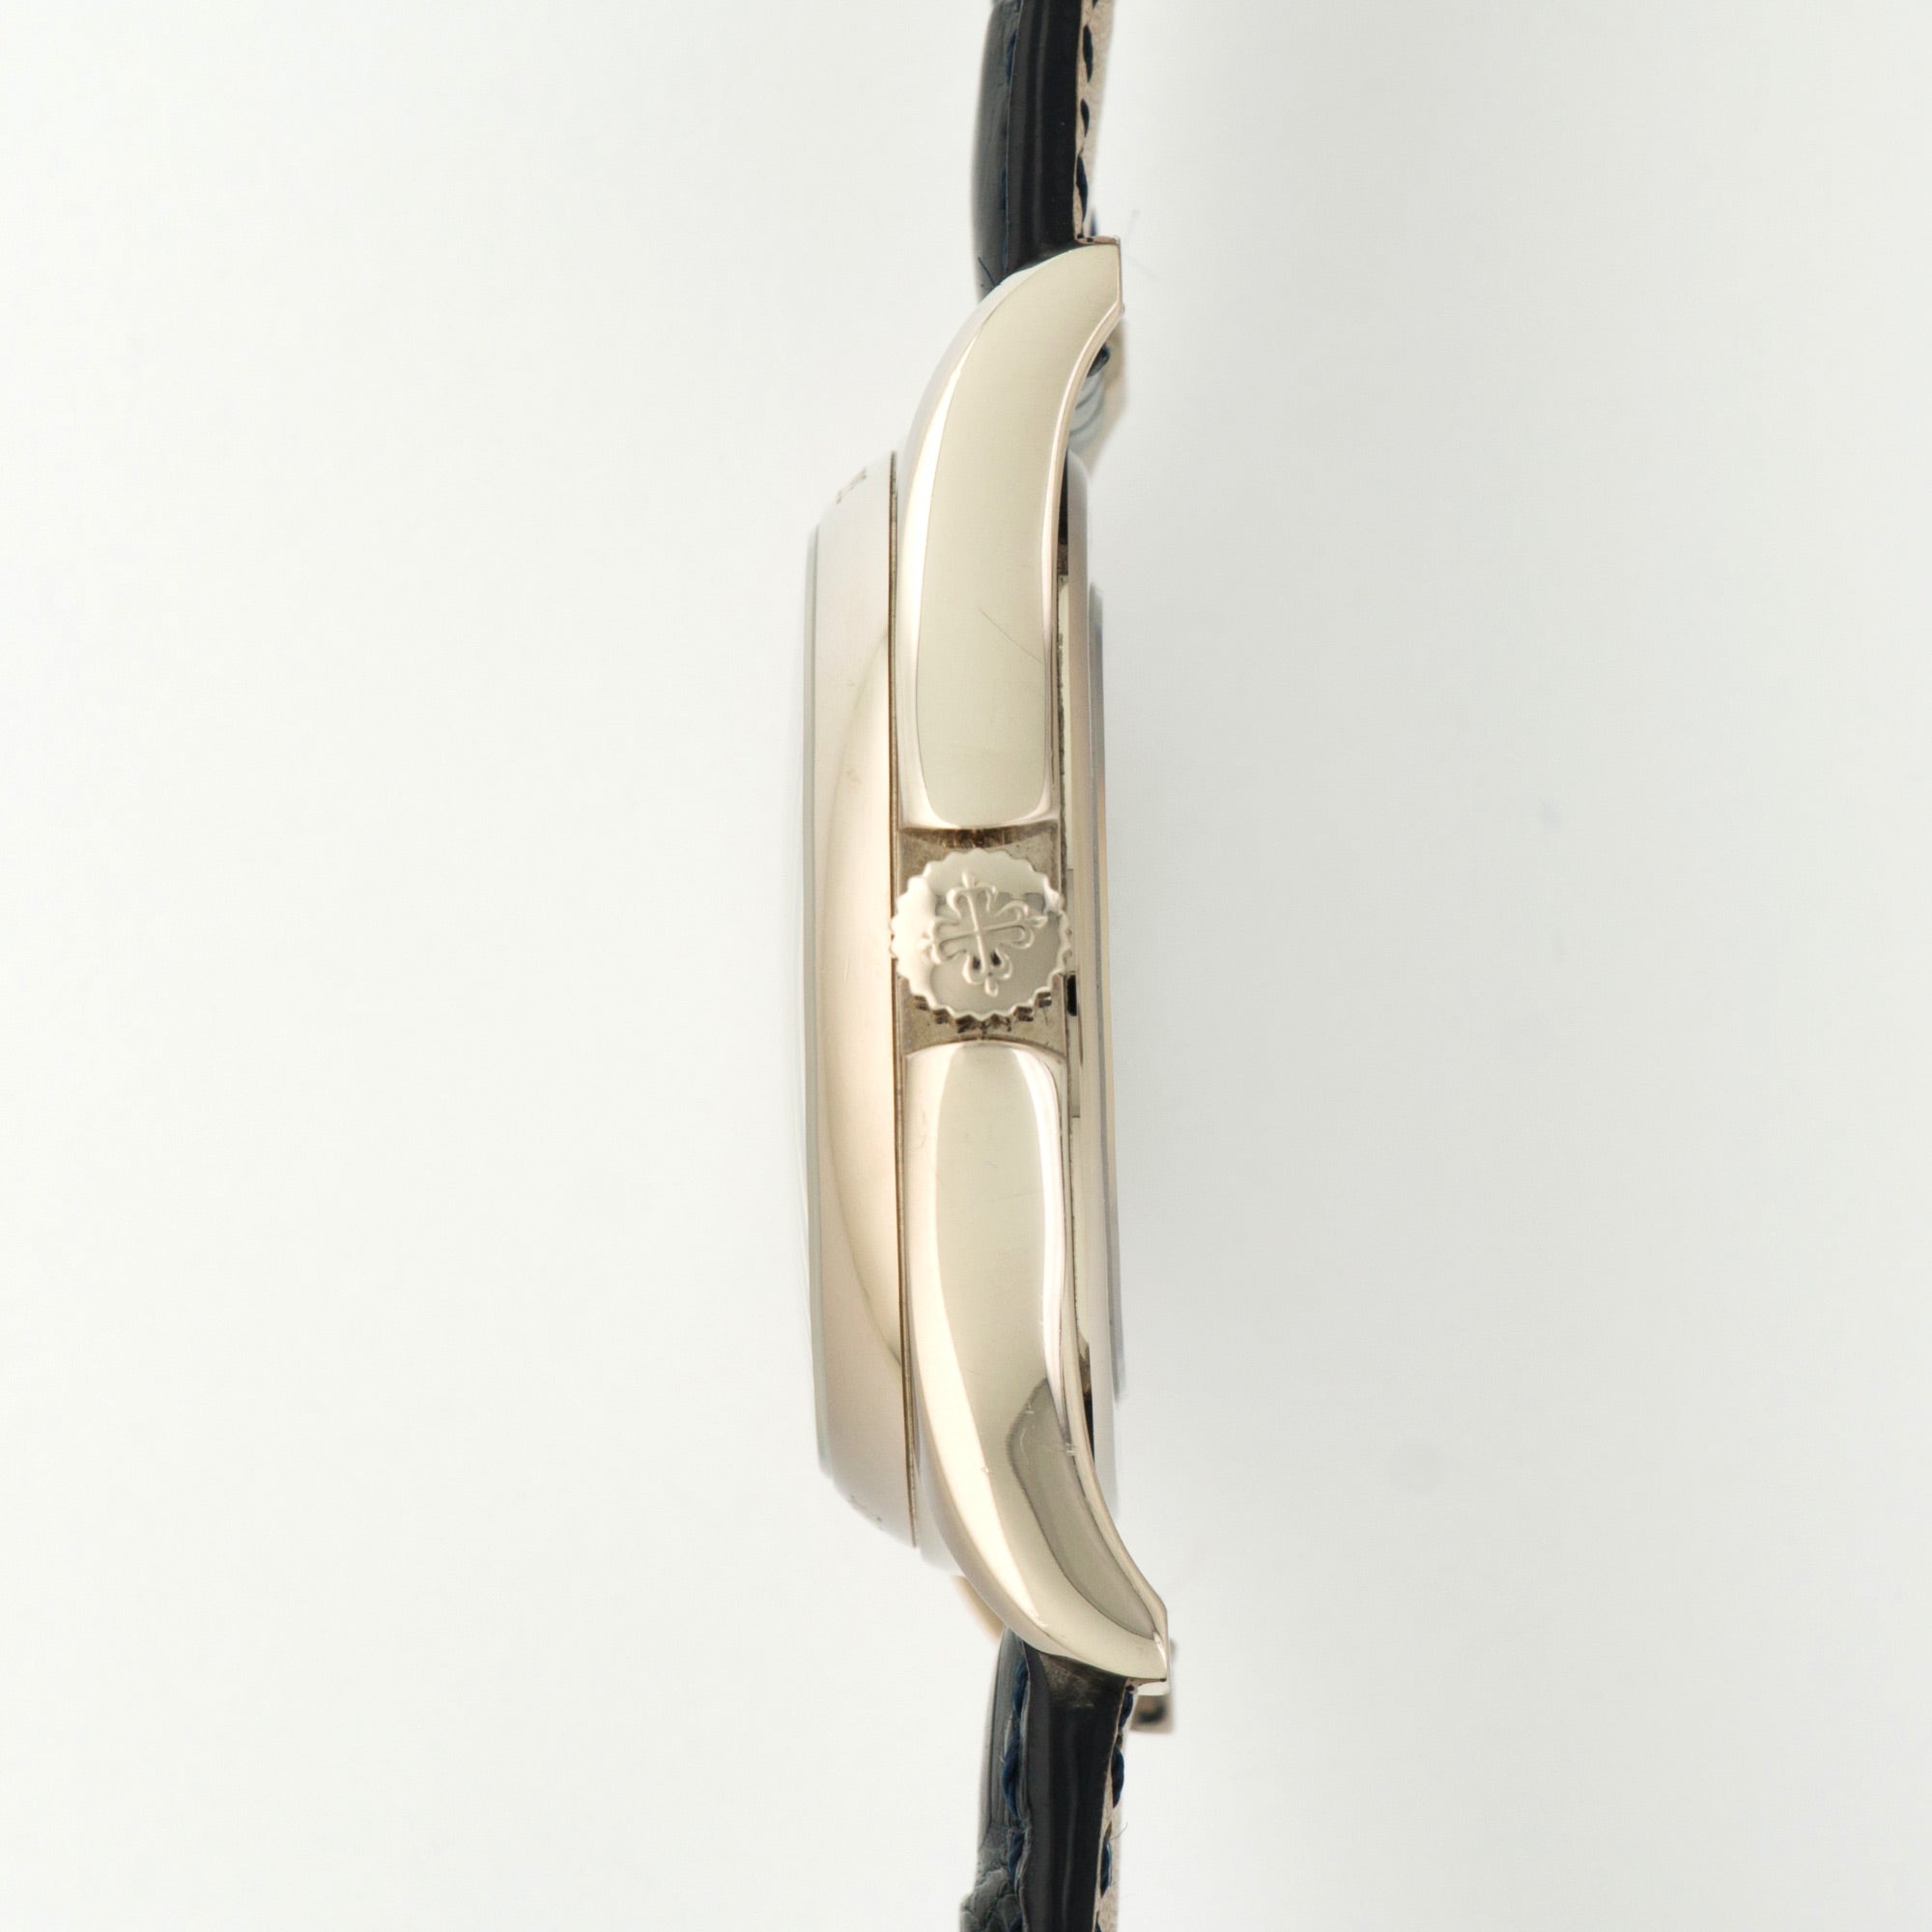 Patek Philippe - Patek Philippe White Gold World Time Cloisonne Watch Ref. 5131G - The Keystone Watches